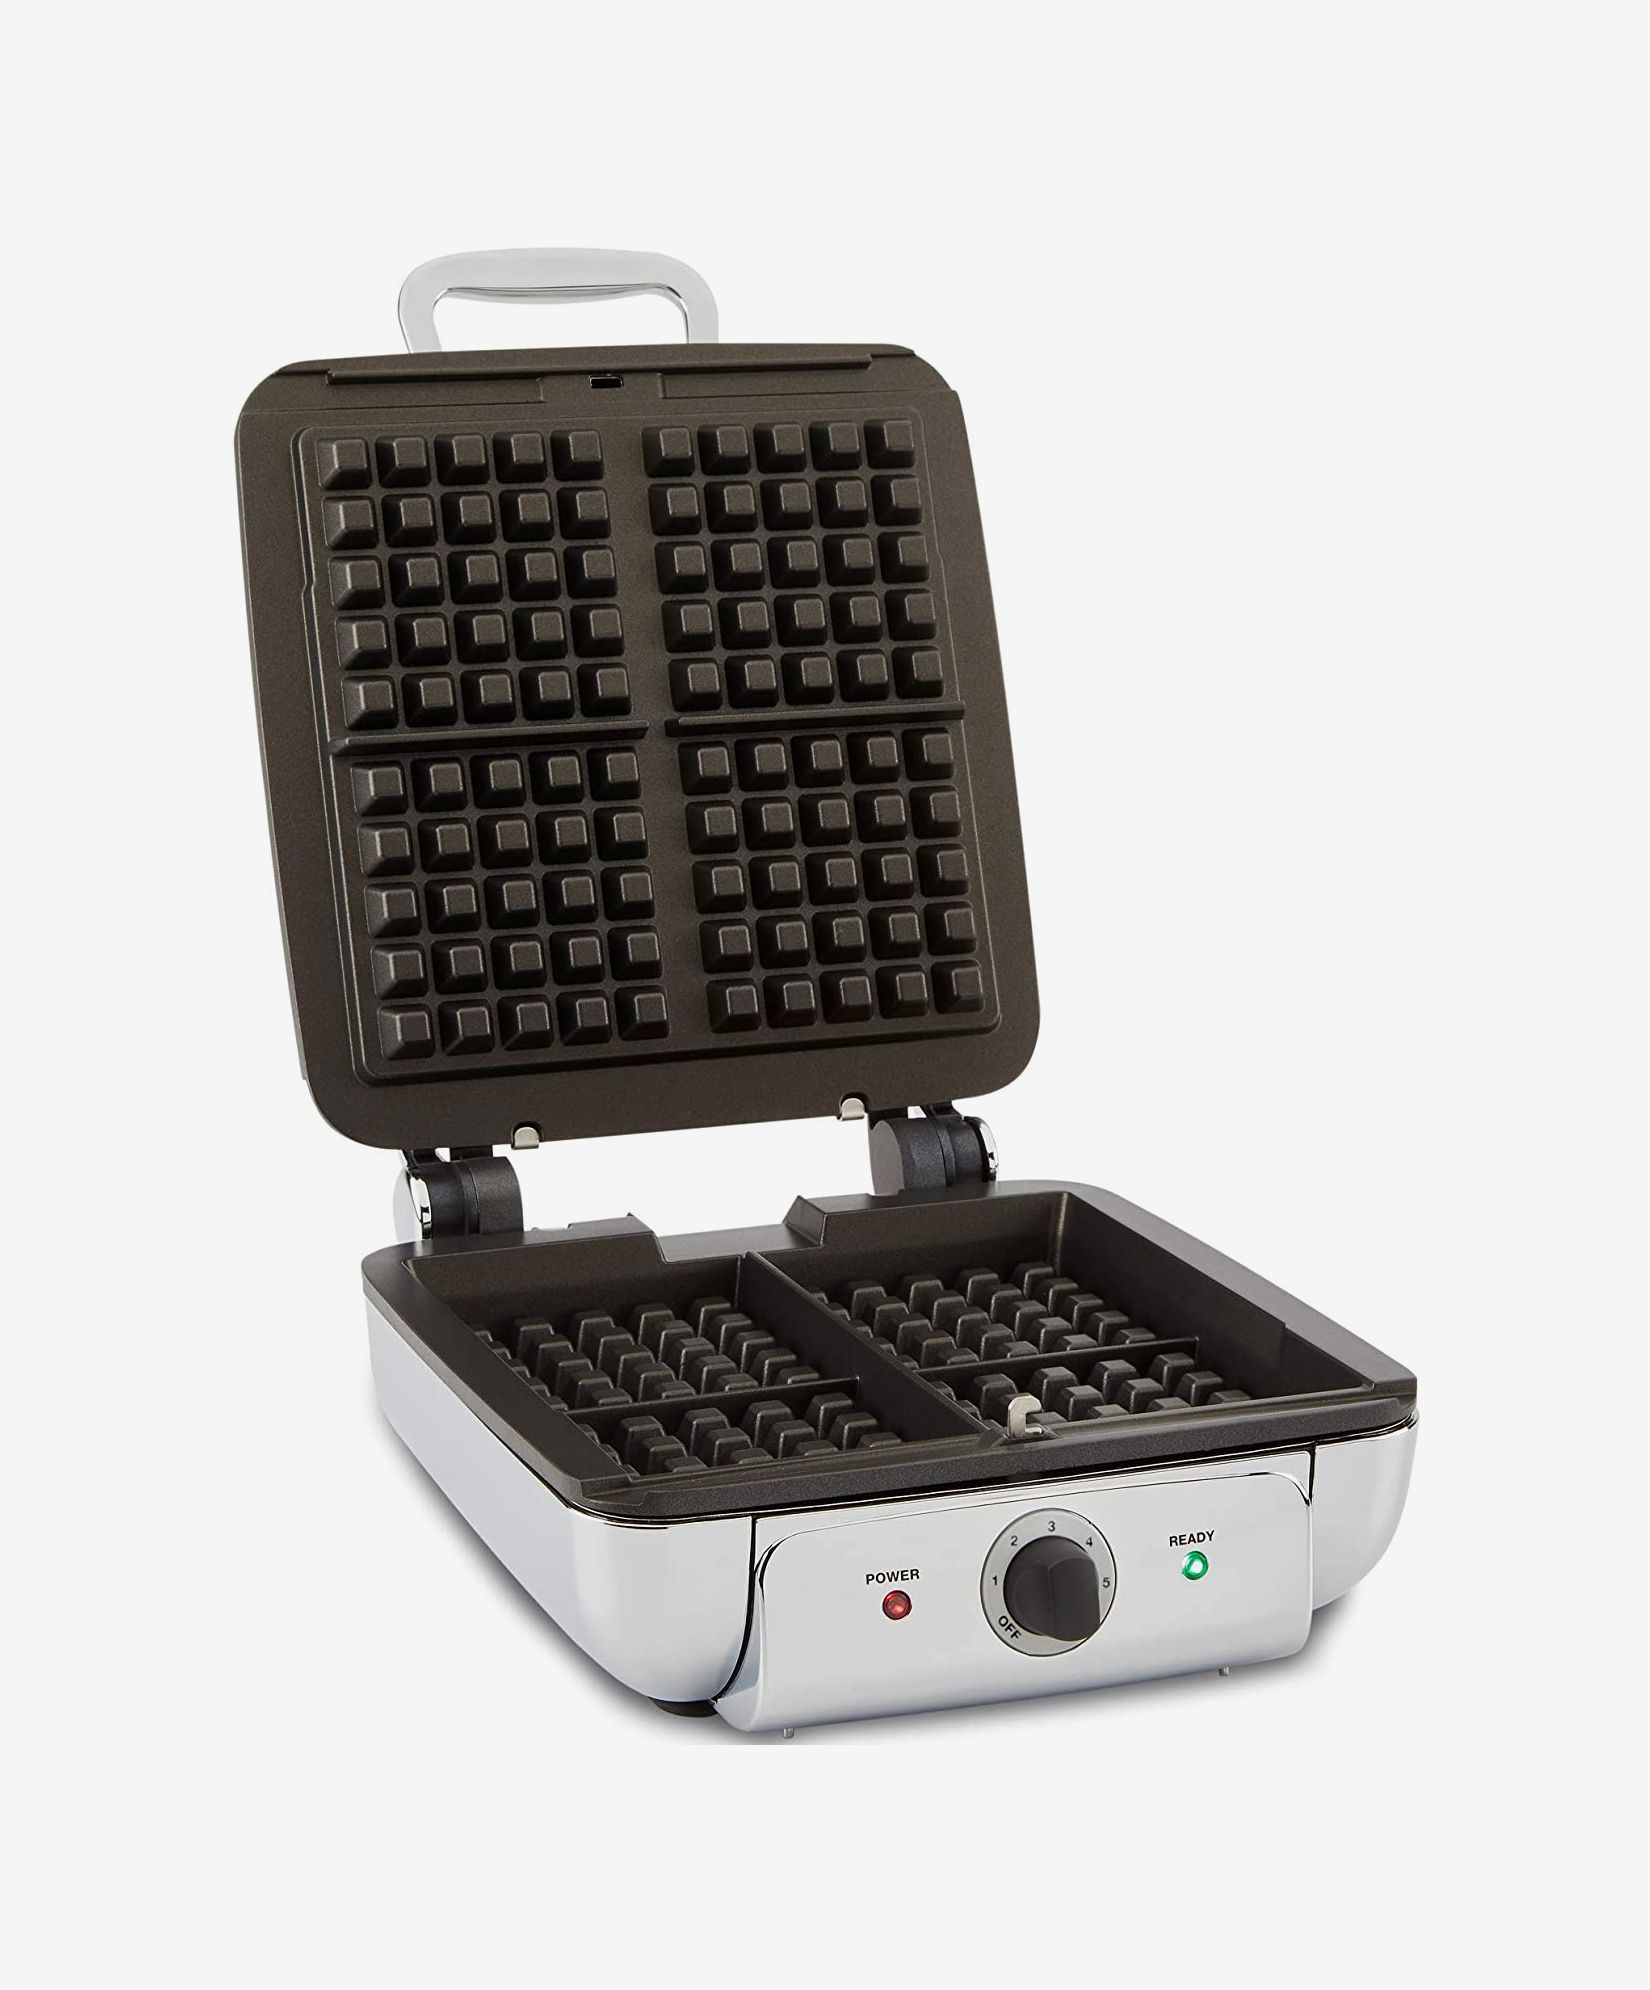 DASH Mini Maker Waffle Maker + Griddle, 2-Pack Griddle + Waffle Iron - Red